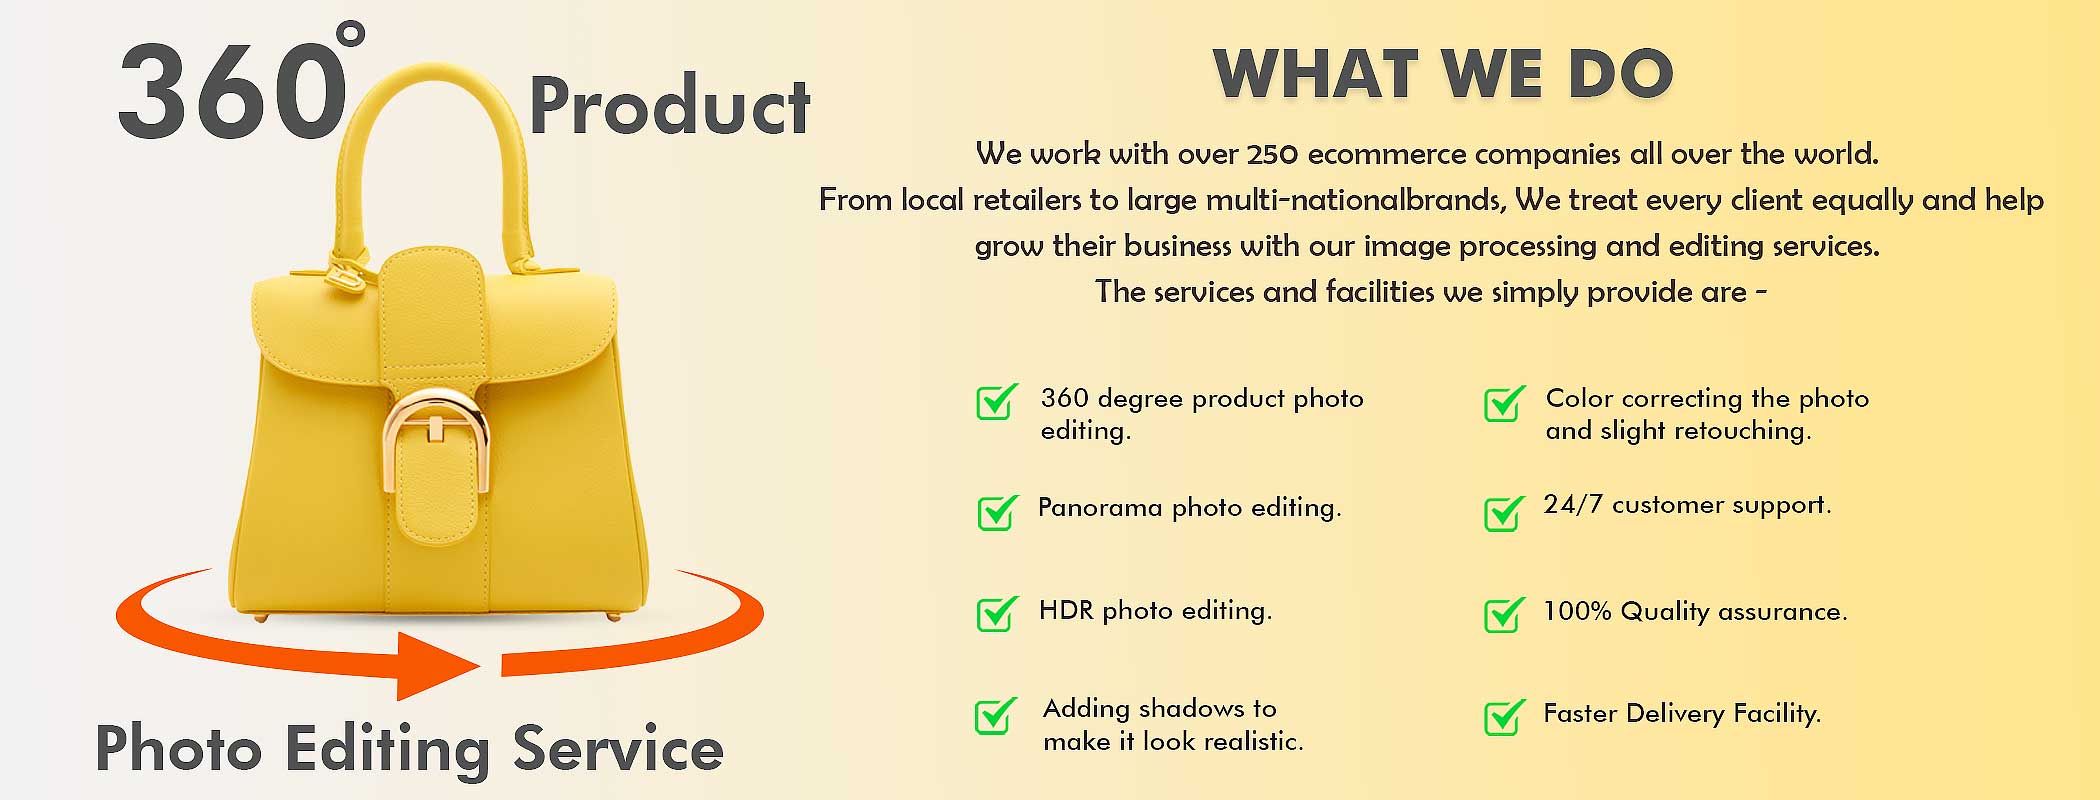 360 degree product image editing service provider company